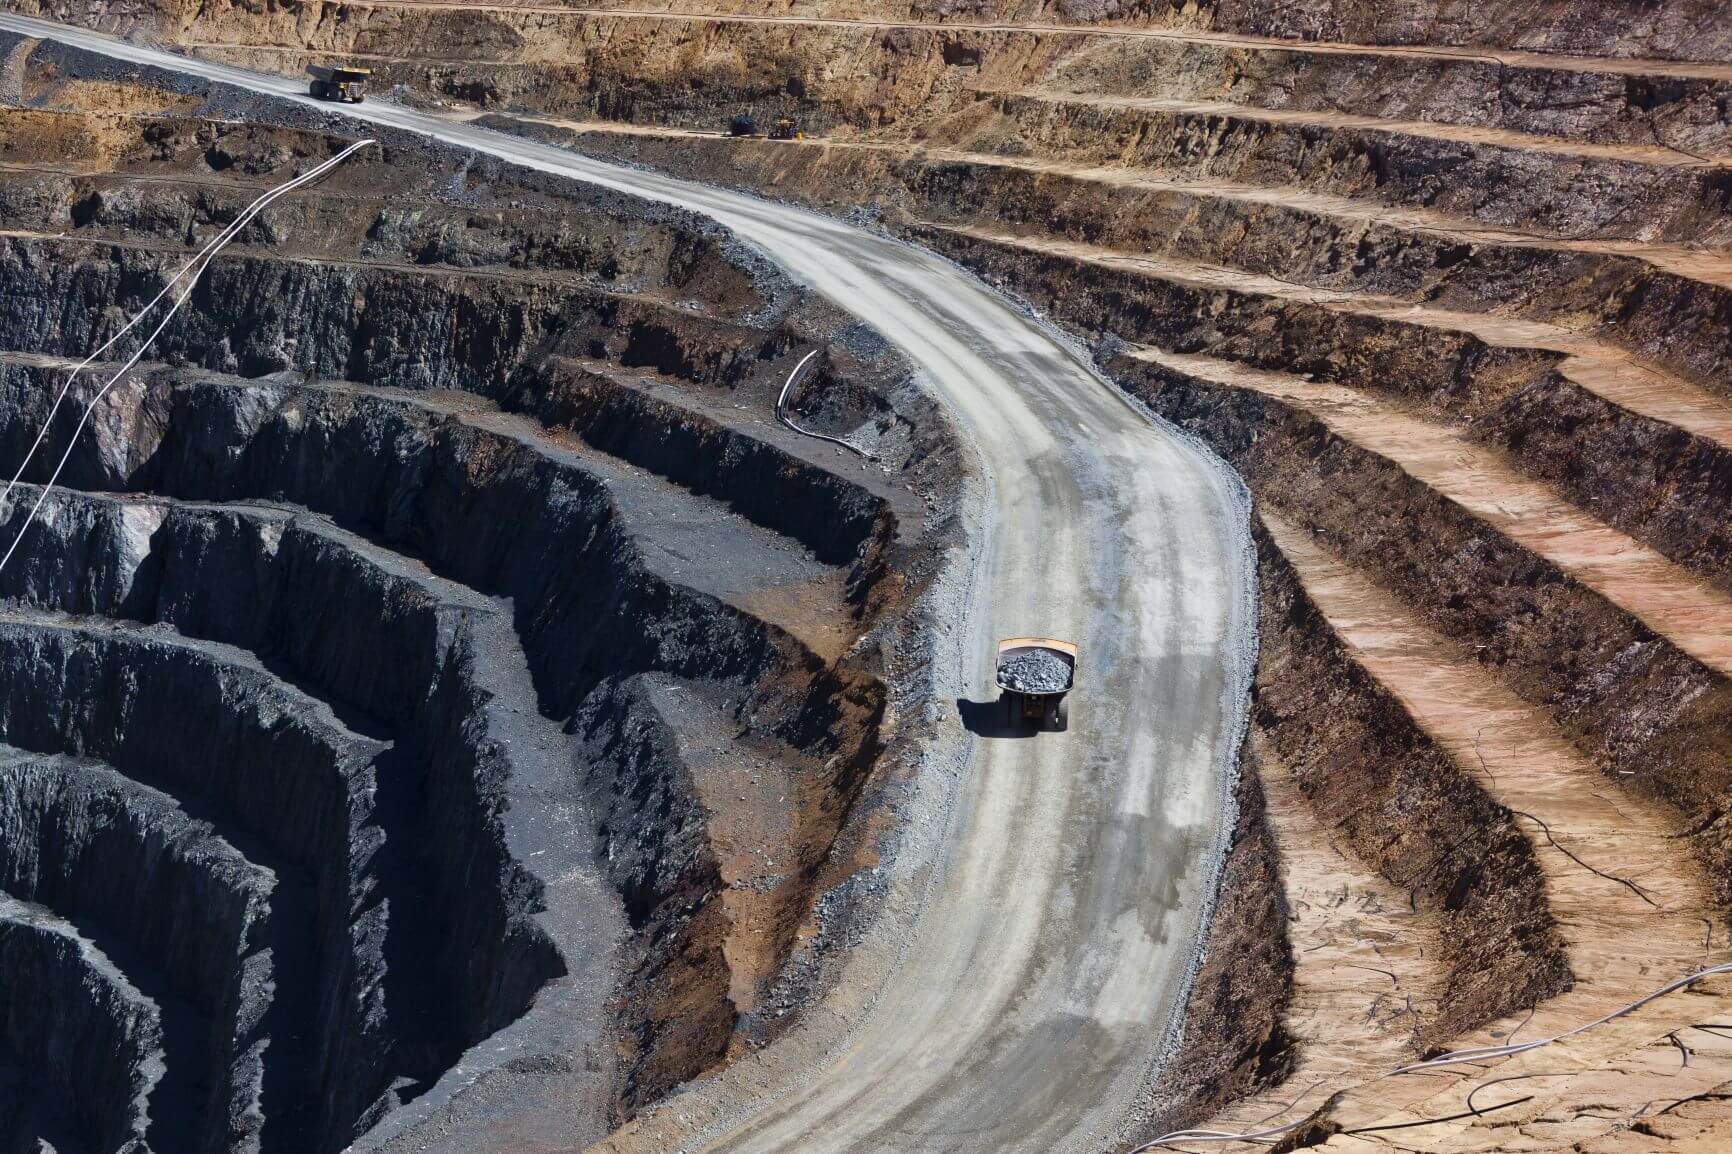 Barrick Cowal Gold Mine